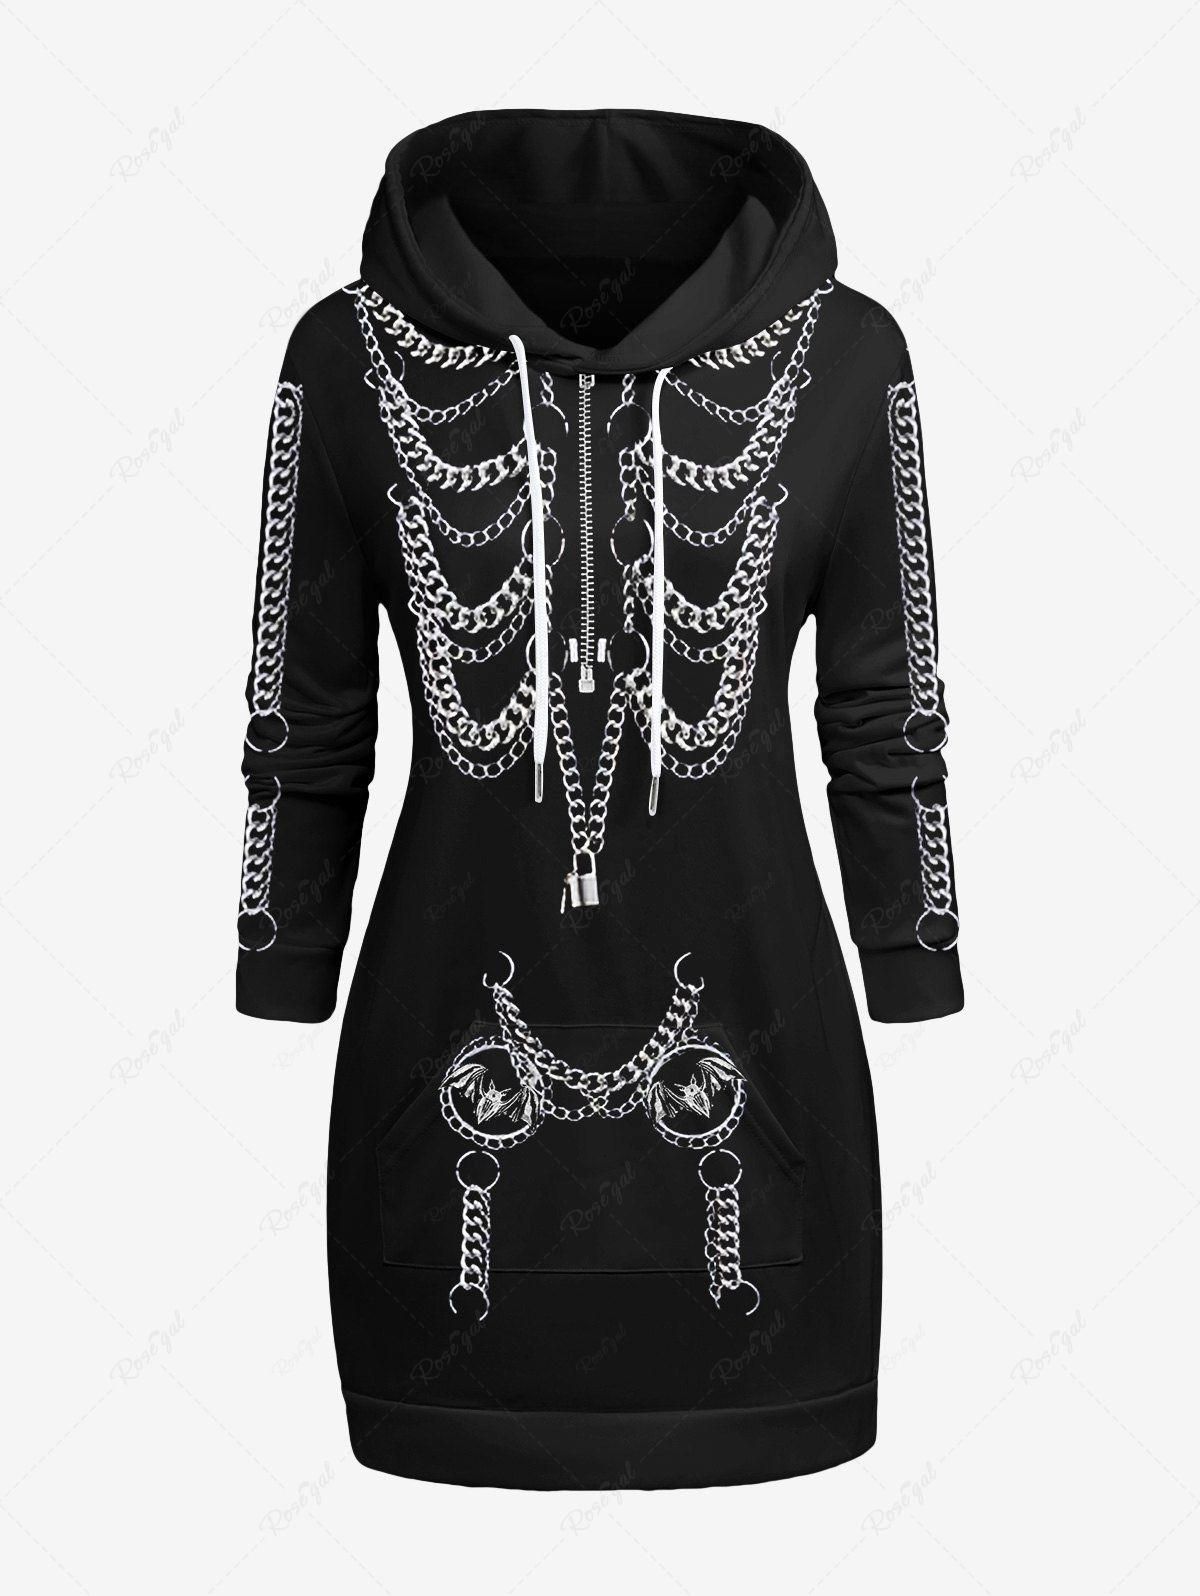 Plus Size Bat Zipper 3D Print Halloween Skeleton Style Chains Drawstring Hooded Dress - 6xl